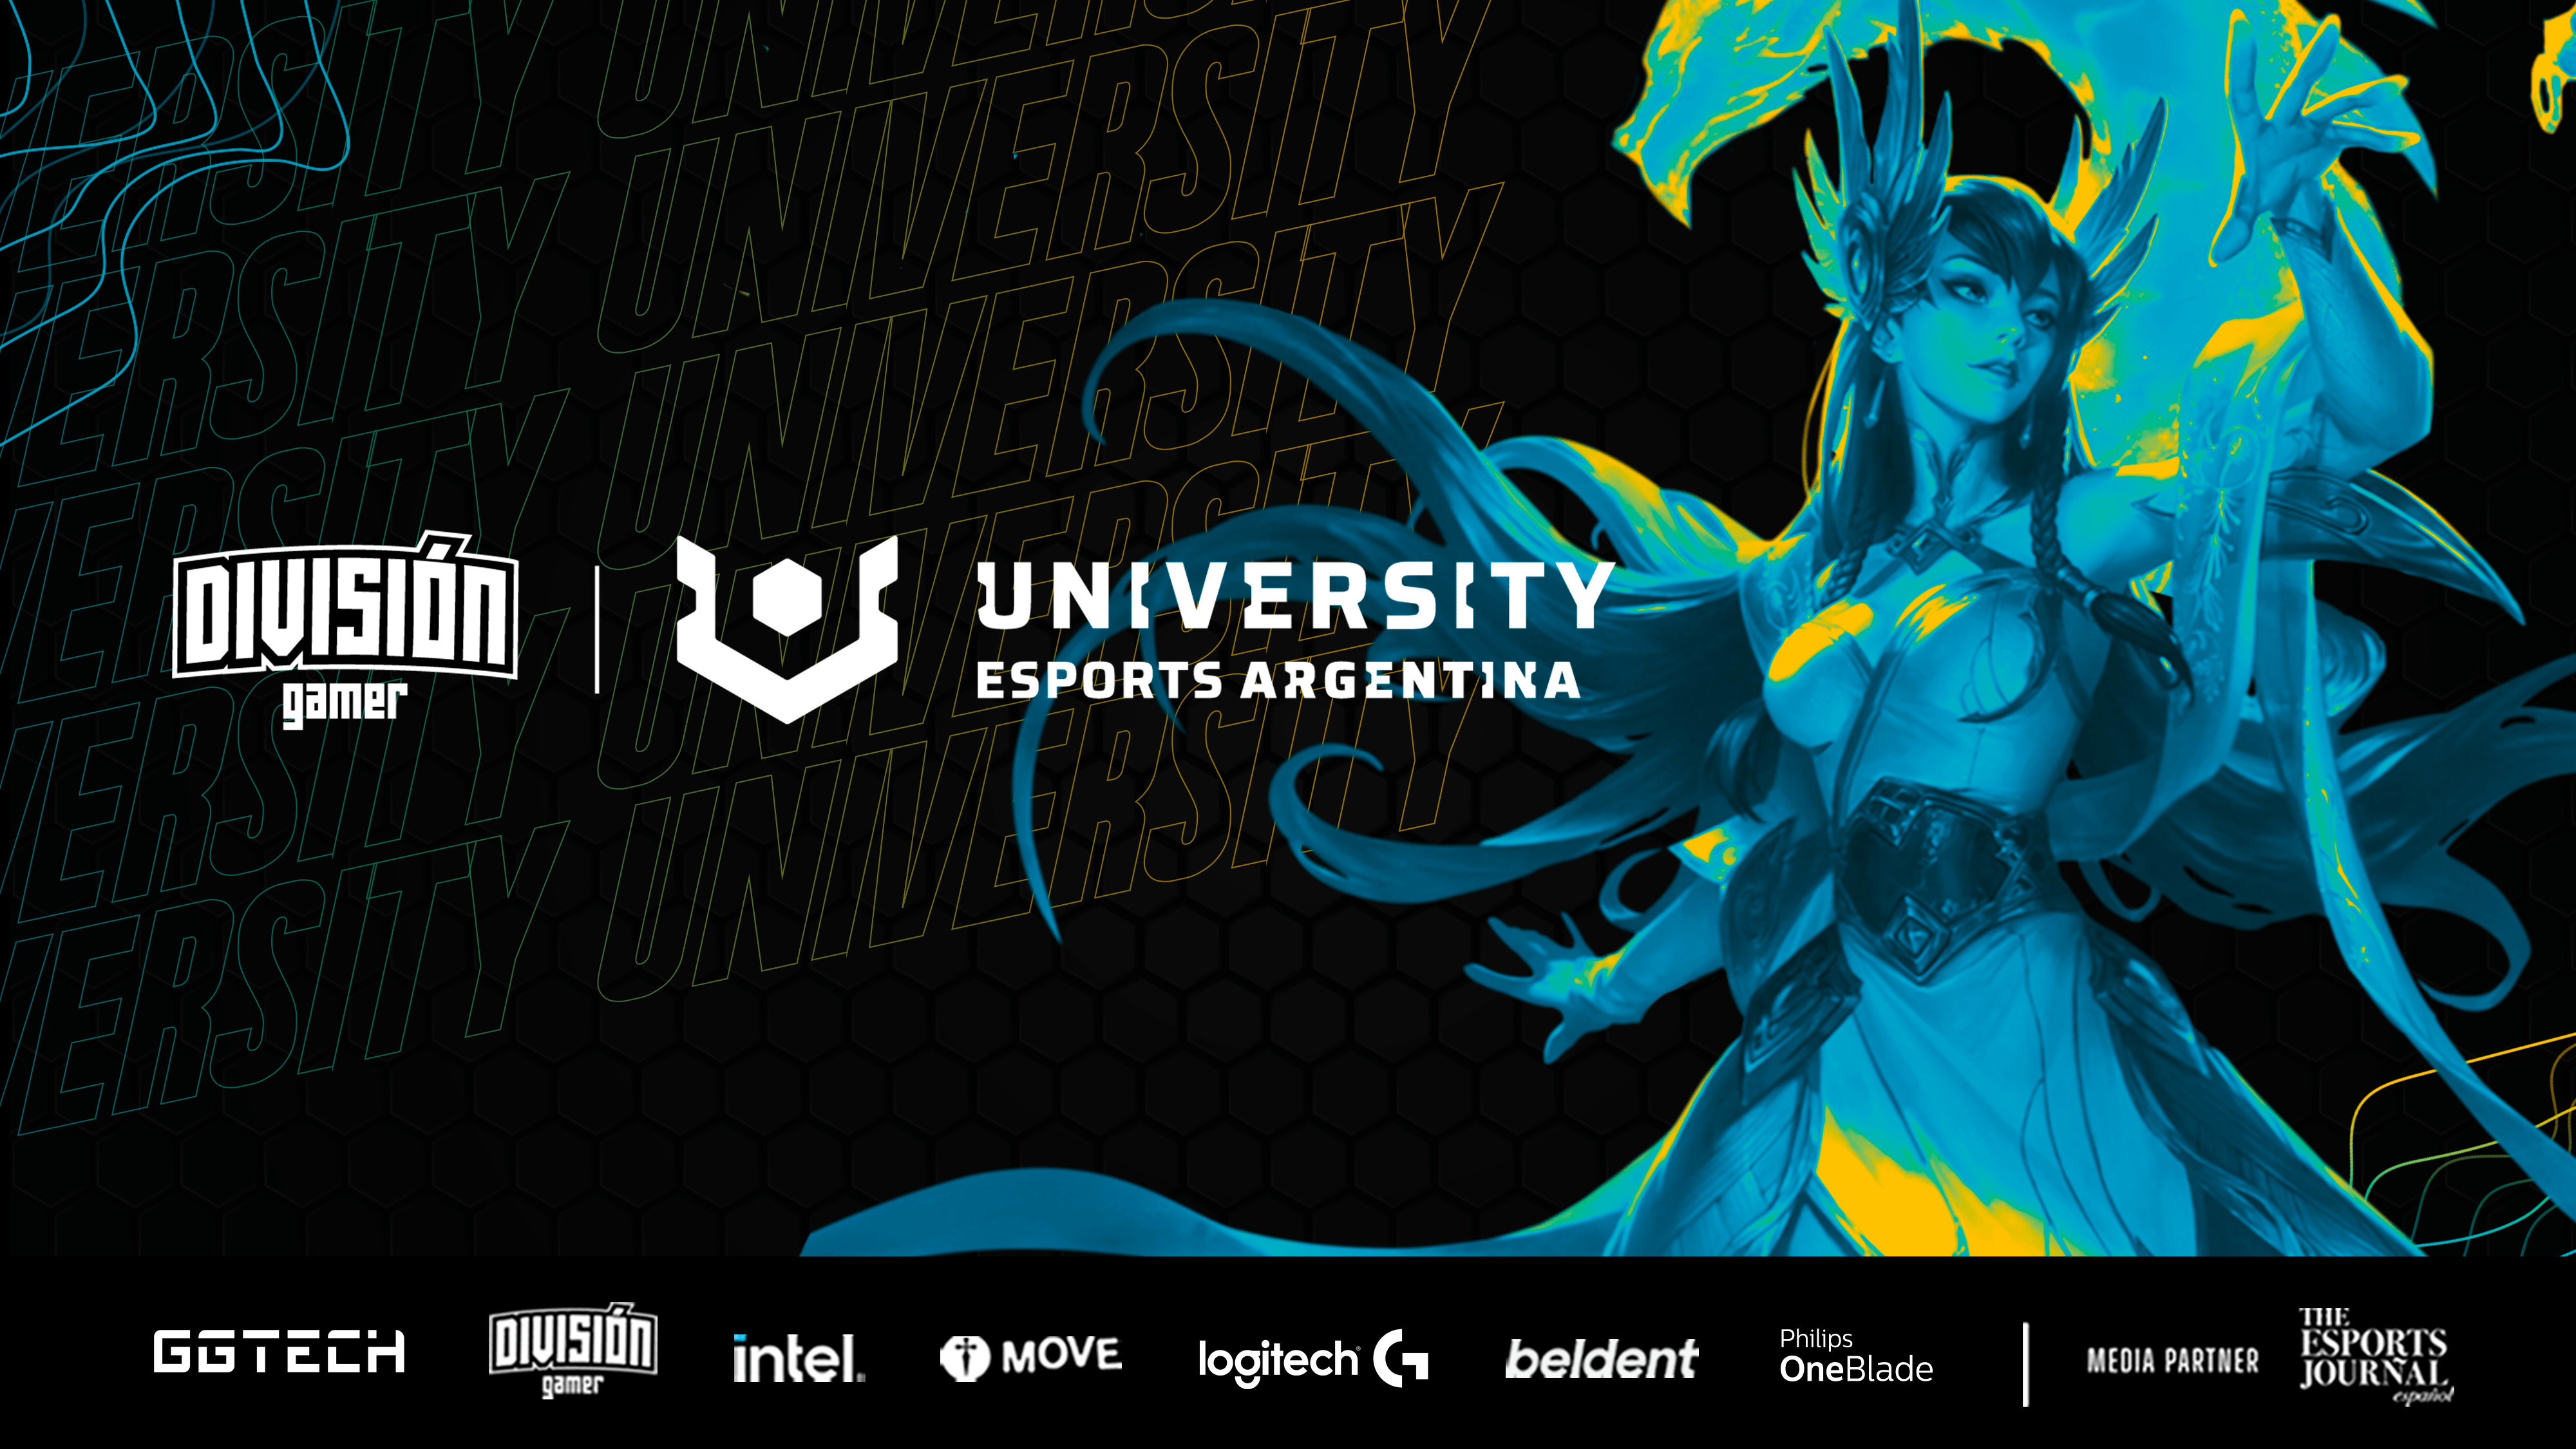 División Game Univerity Esports Argentina